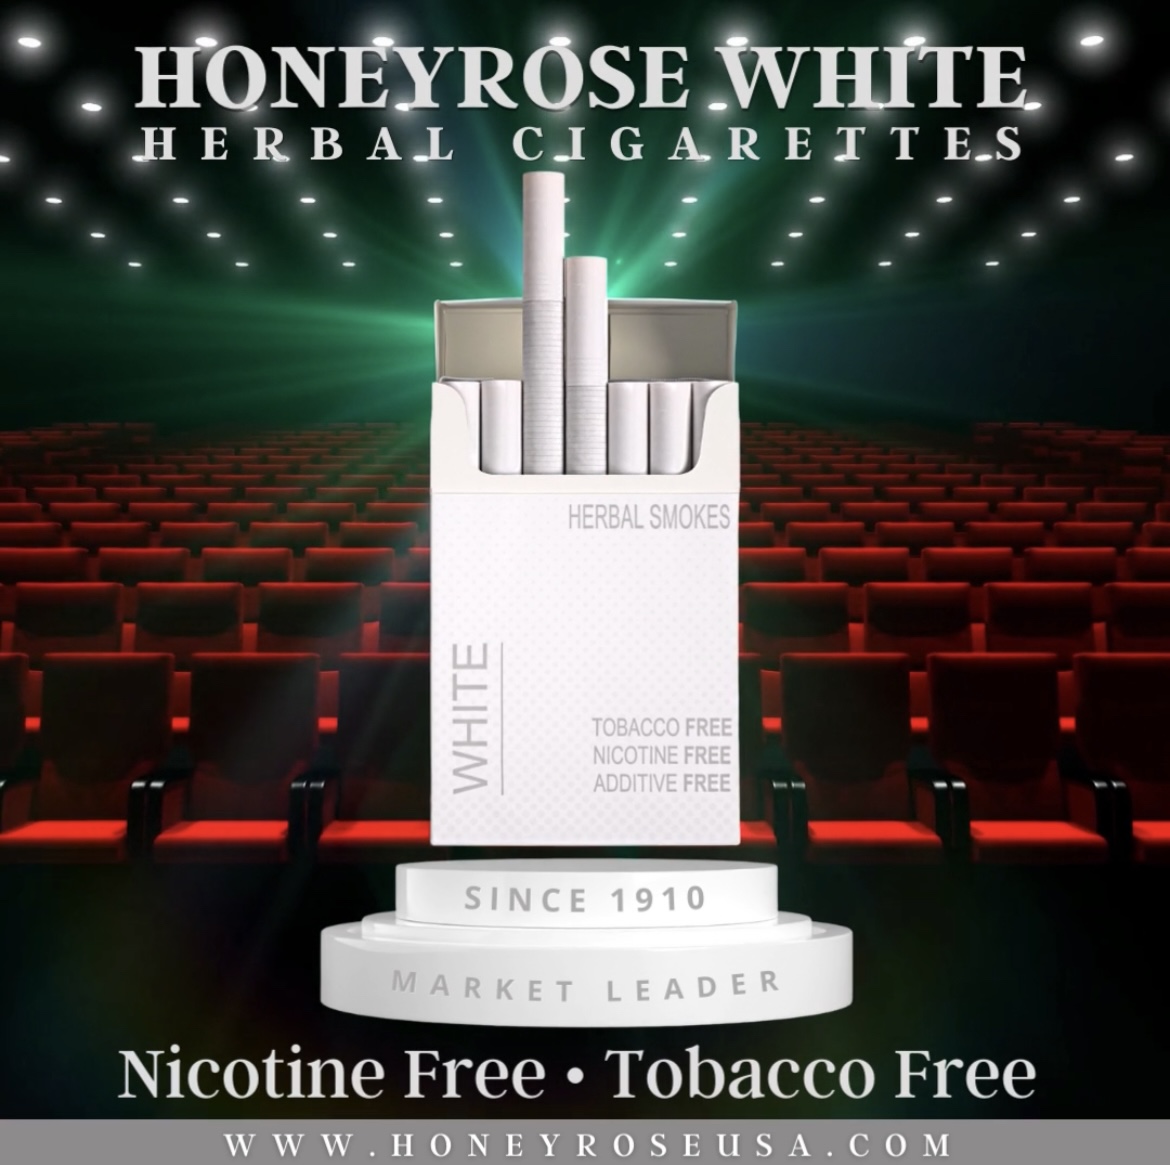 White-Line-HoneyroseUSA-Prop-Cigarettes-Herbal-TV-movie-cigarettes-actors-smoke-herbal-smokes-from-honeyrose-usa